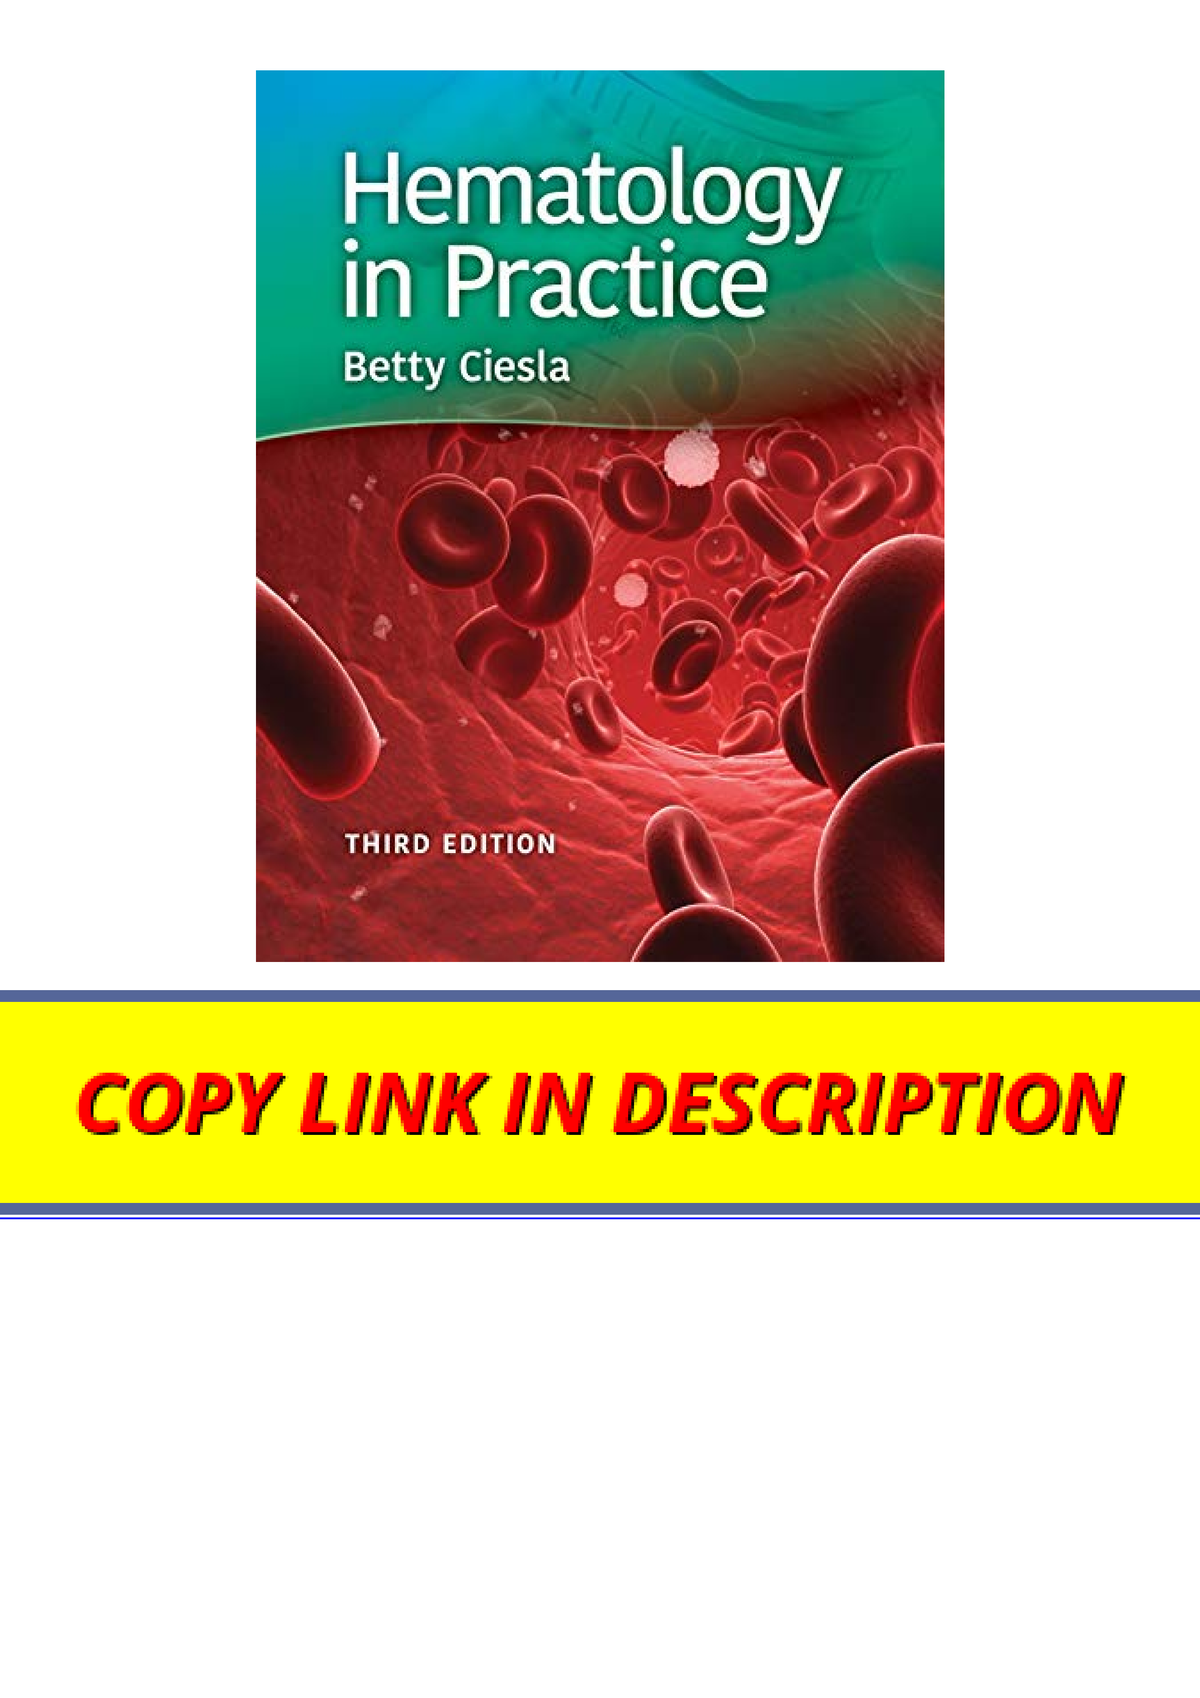 Ebook Download Hematology In Practice Full Ebook Download Hematology In Practice Full